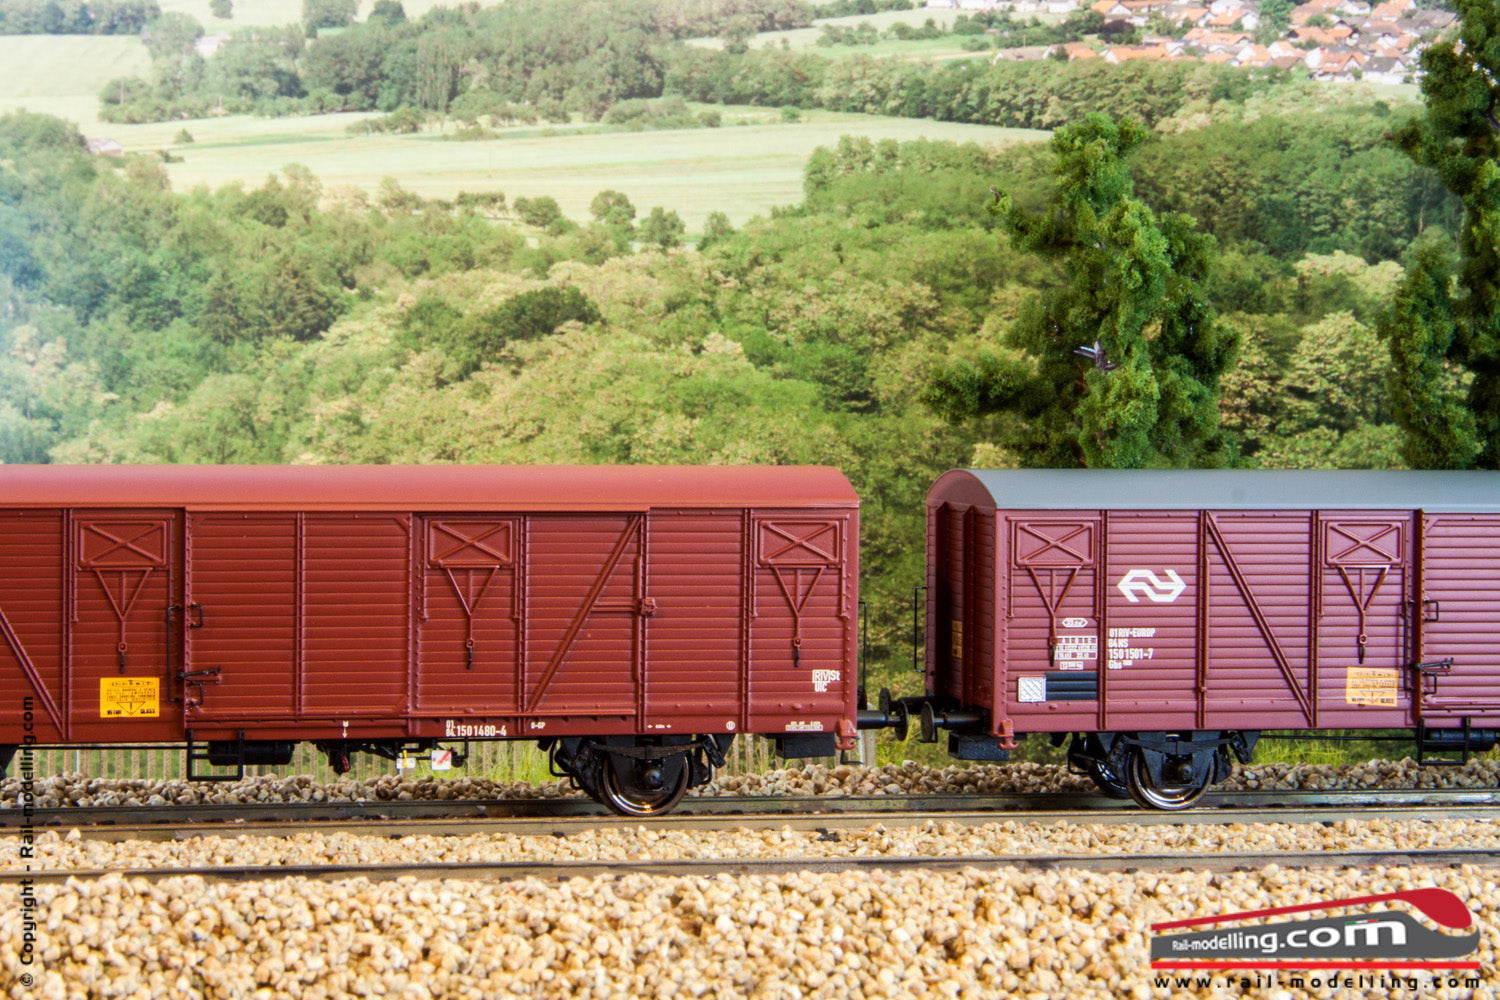 EXACT-TRAIN EX20185 - H0 1:87 - Set 2 carri Gbs NS EUROP con tetto metallico